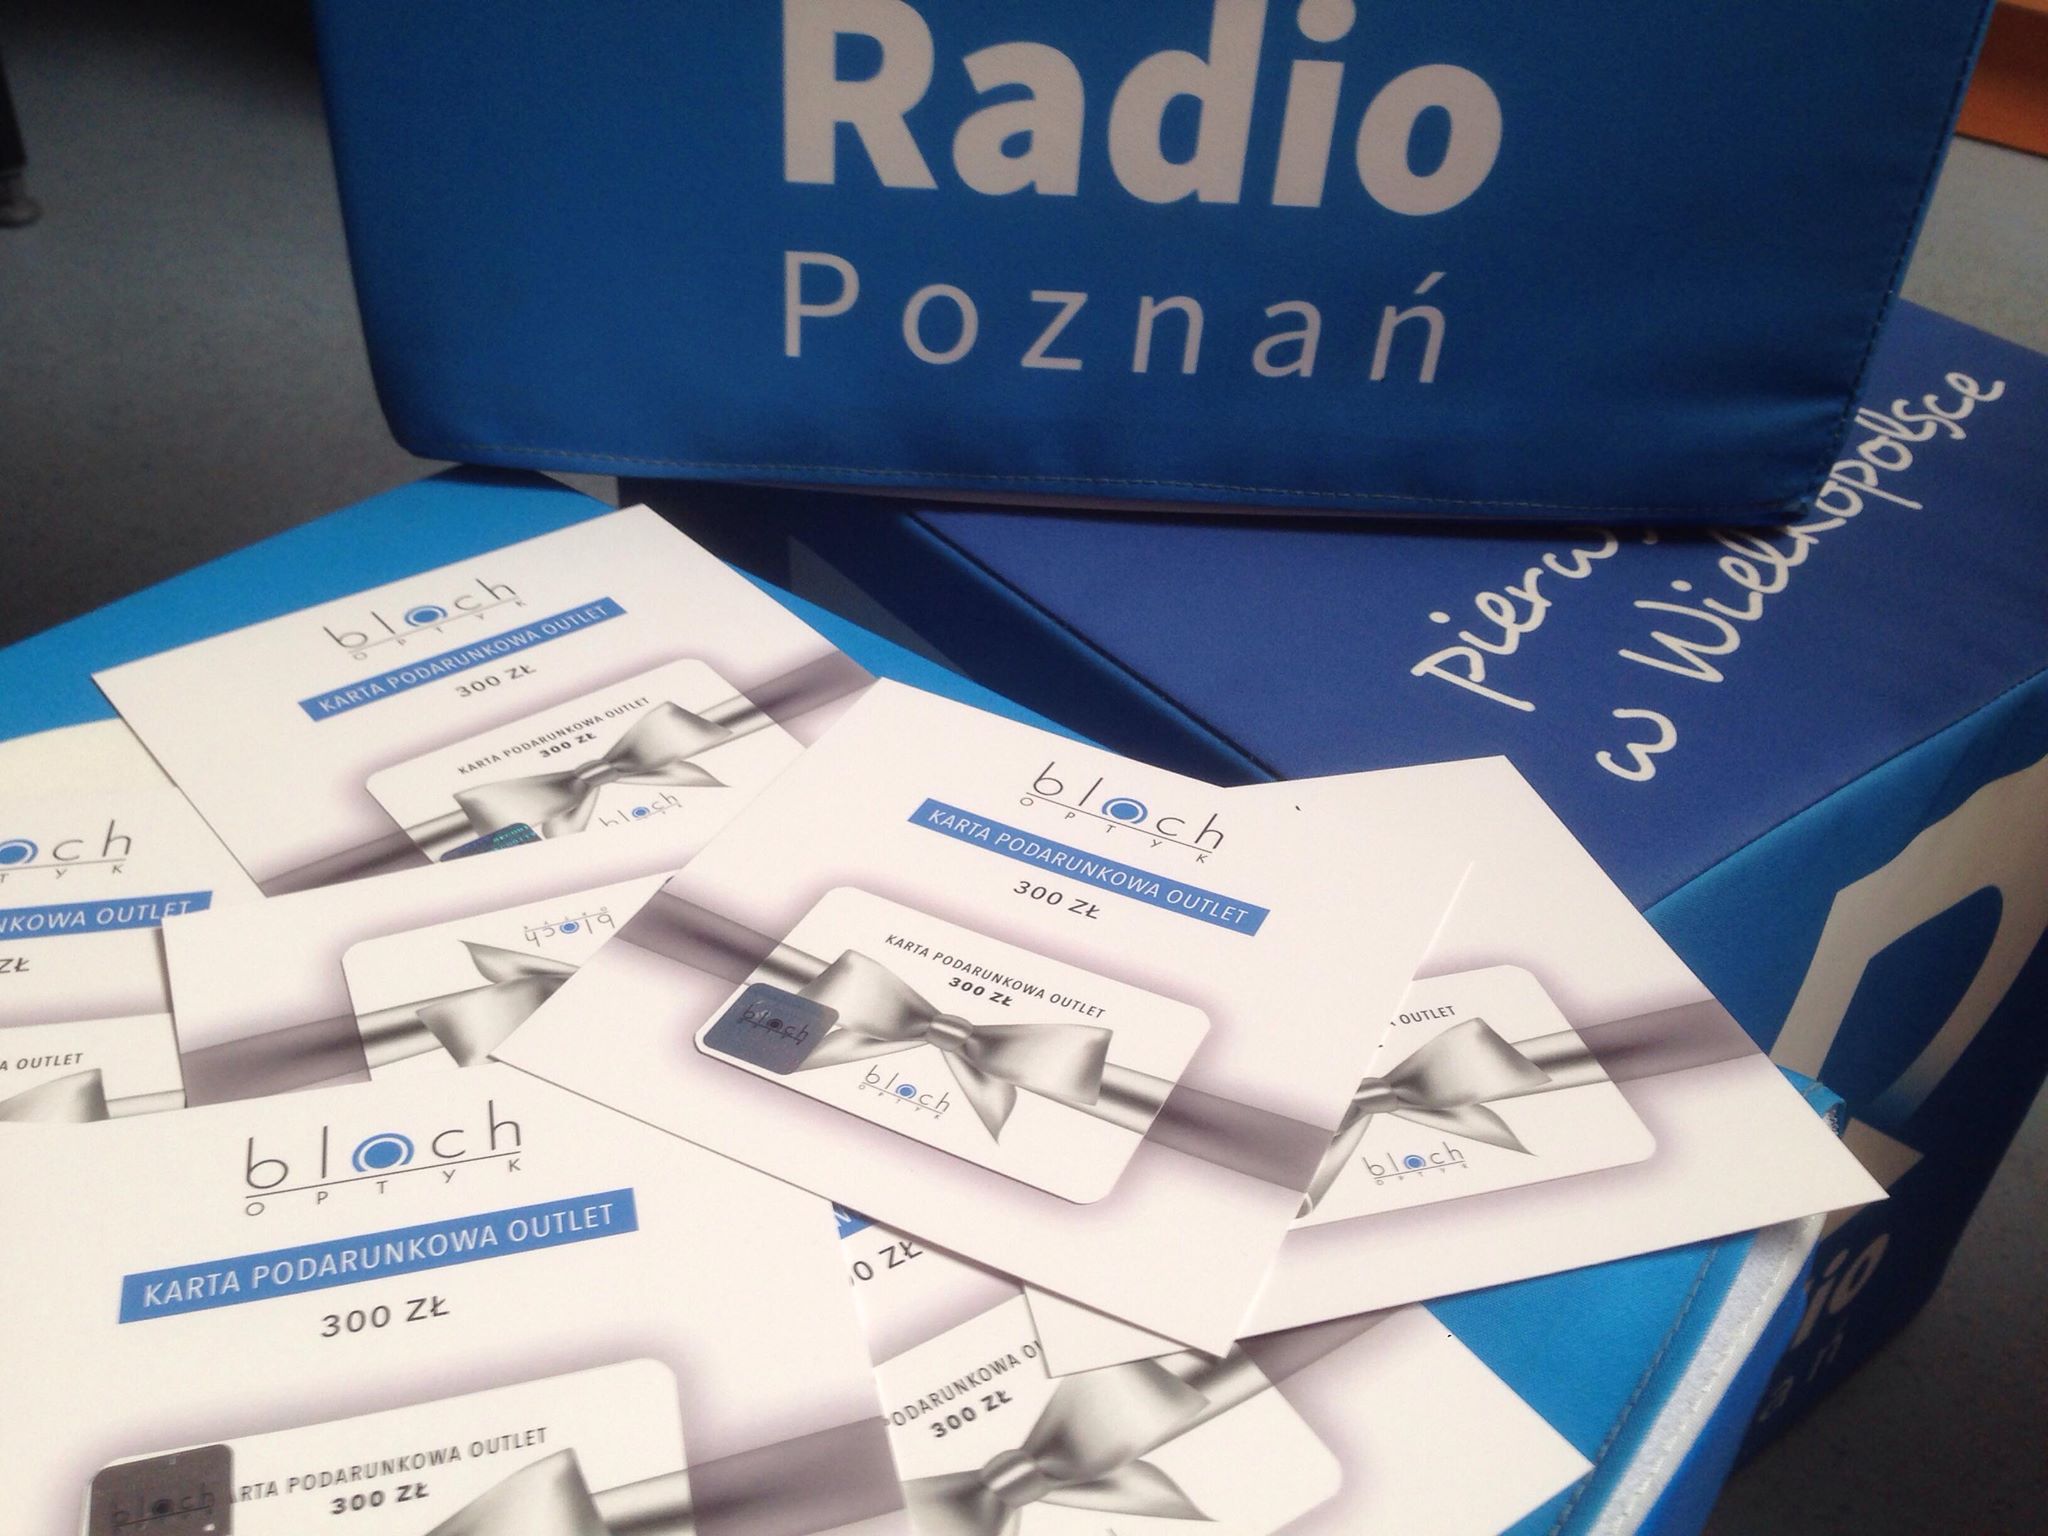 Błoch Konkurs - Radio Poznań